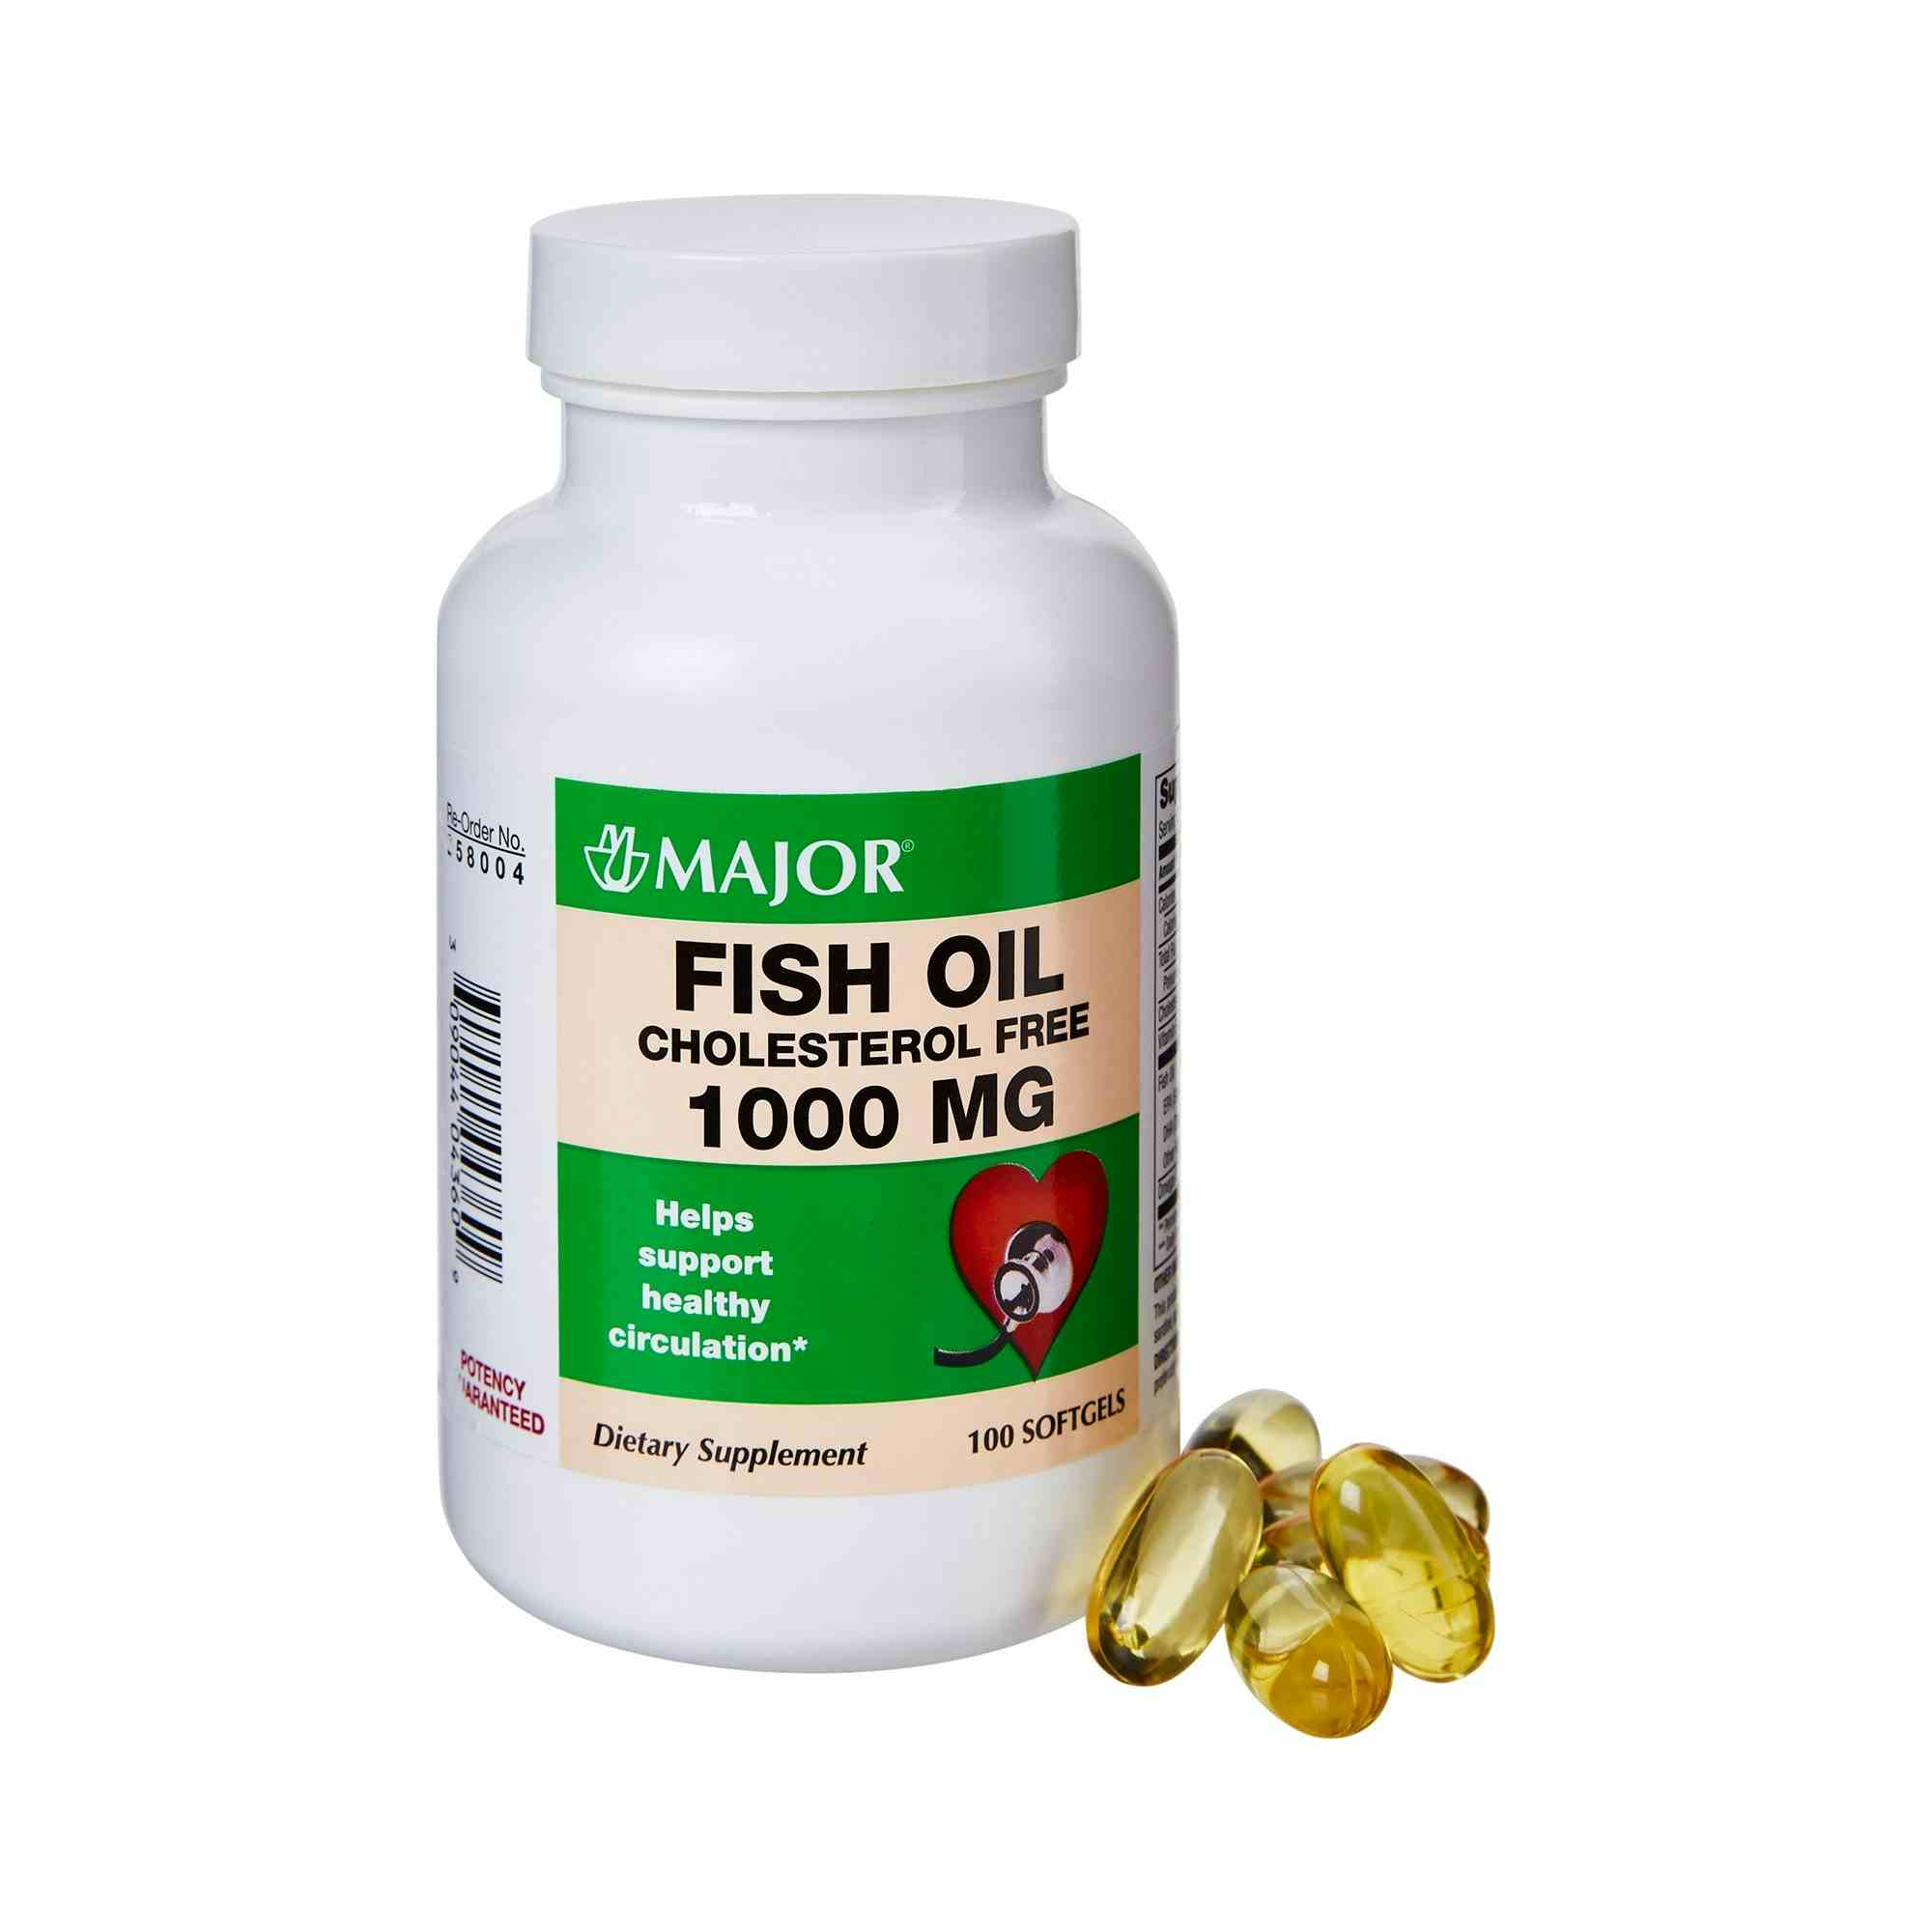 Major Cholesterol Free Fish Oil, 1000 mg, 100 Capsules, 00904404360, 1 Bottle